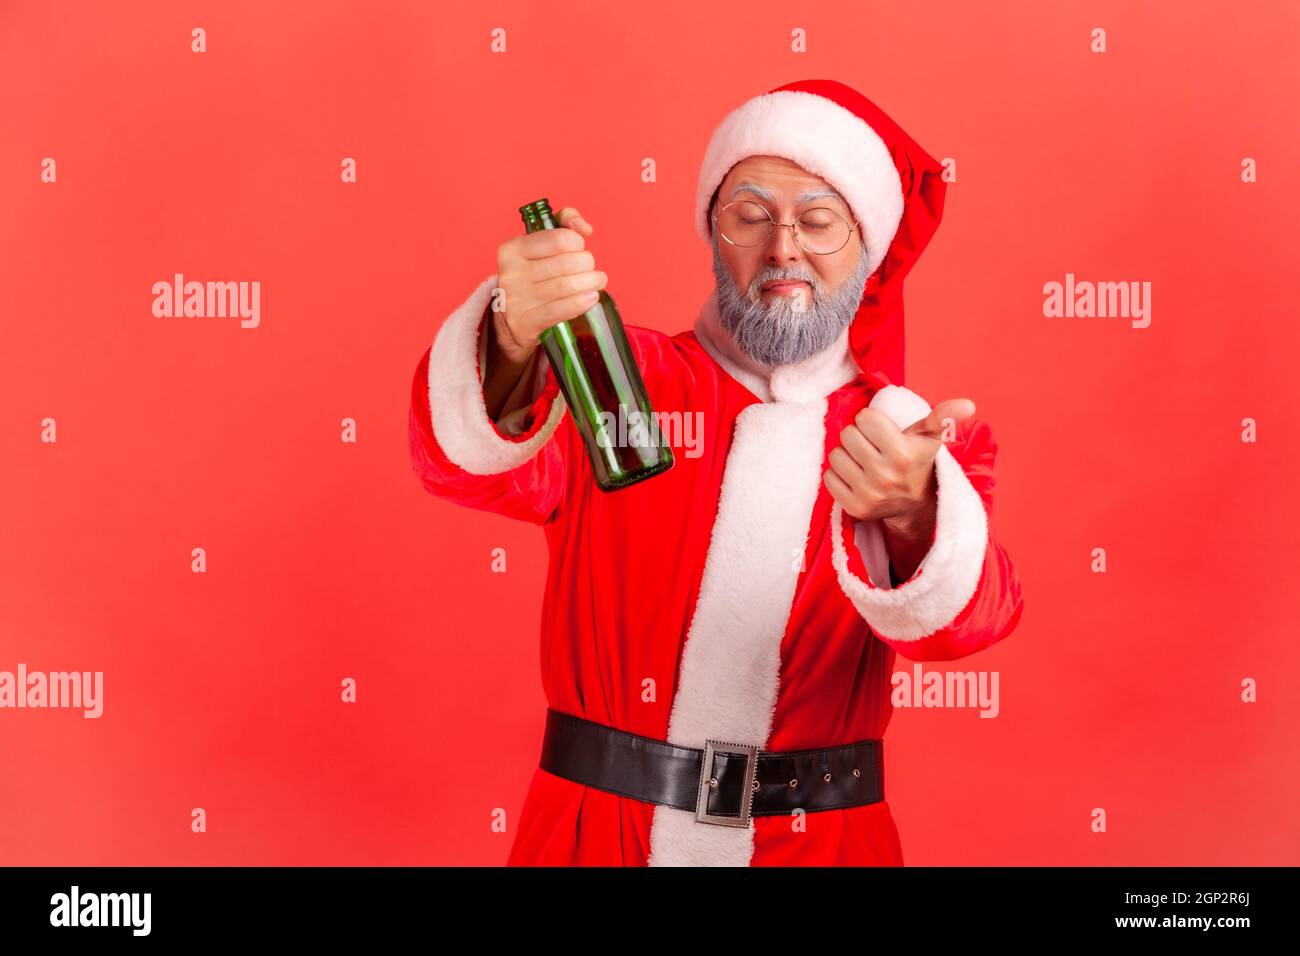 Betrunkene Frau in Santa Claus Kostüm mit alkohol, Stock Bild